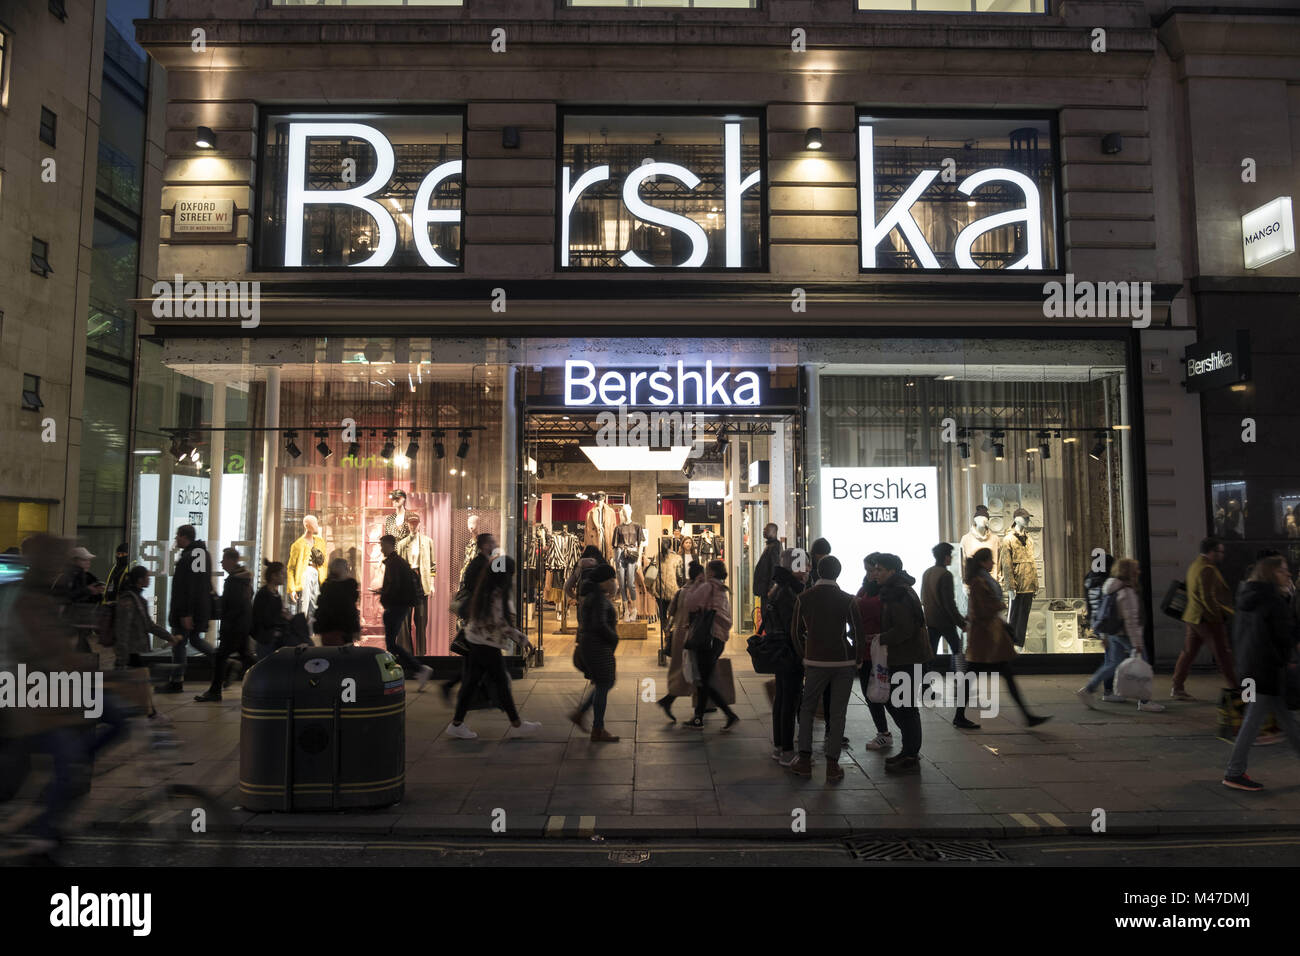 London, UK. 30th Jan, 2018. Bershka store seen in London famous Stock Photo  - Alamy